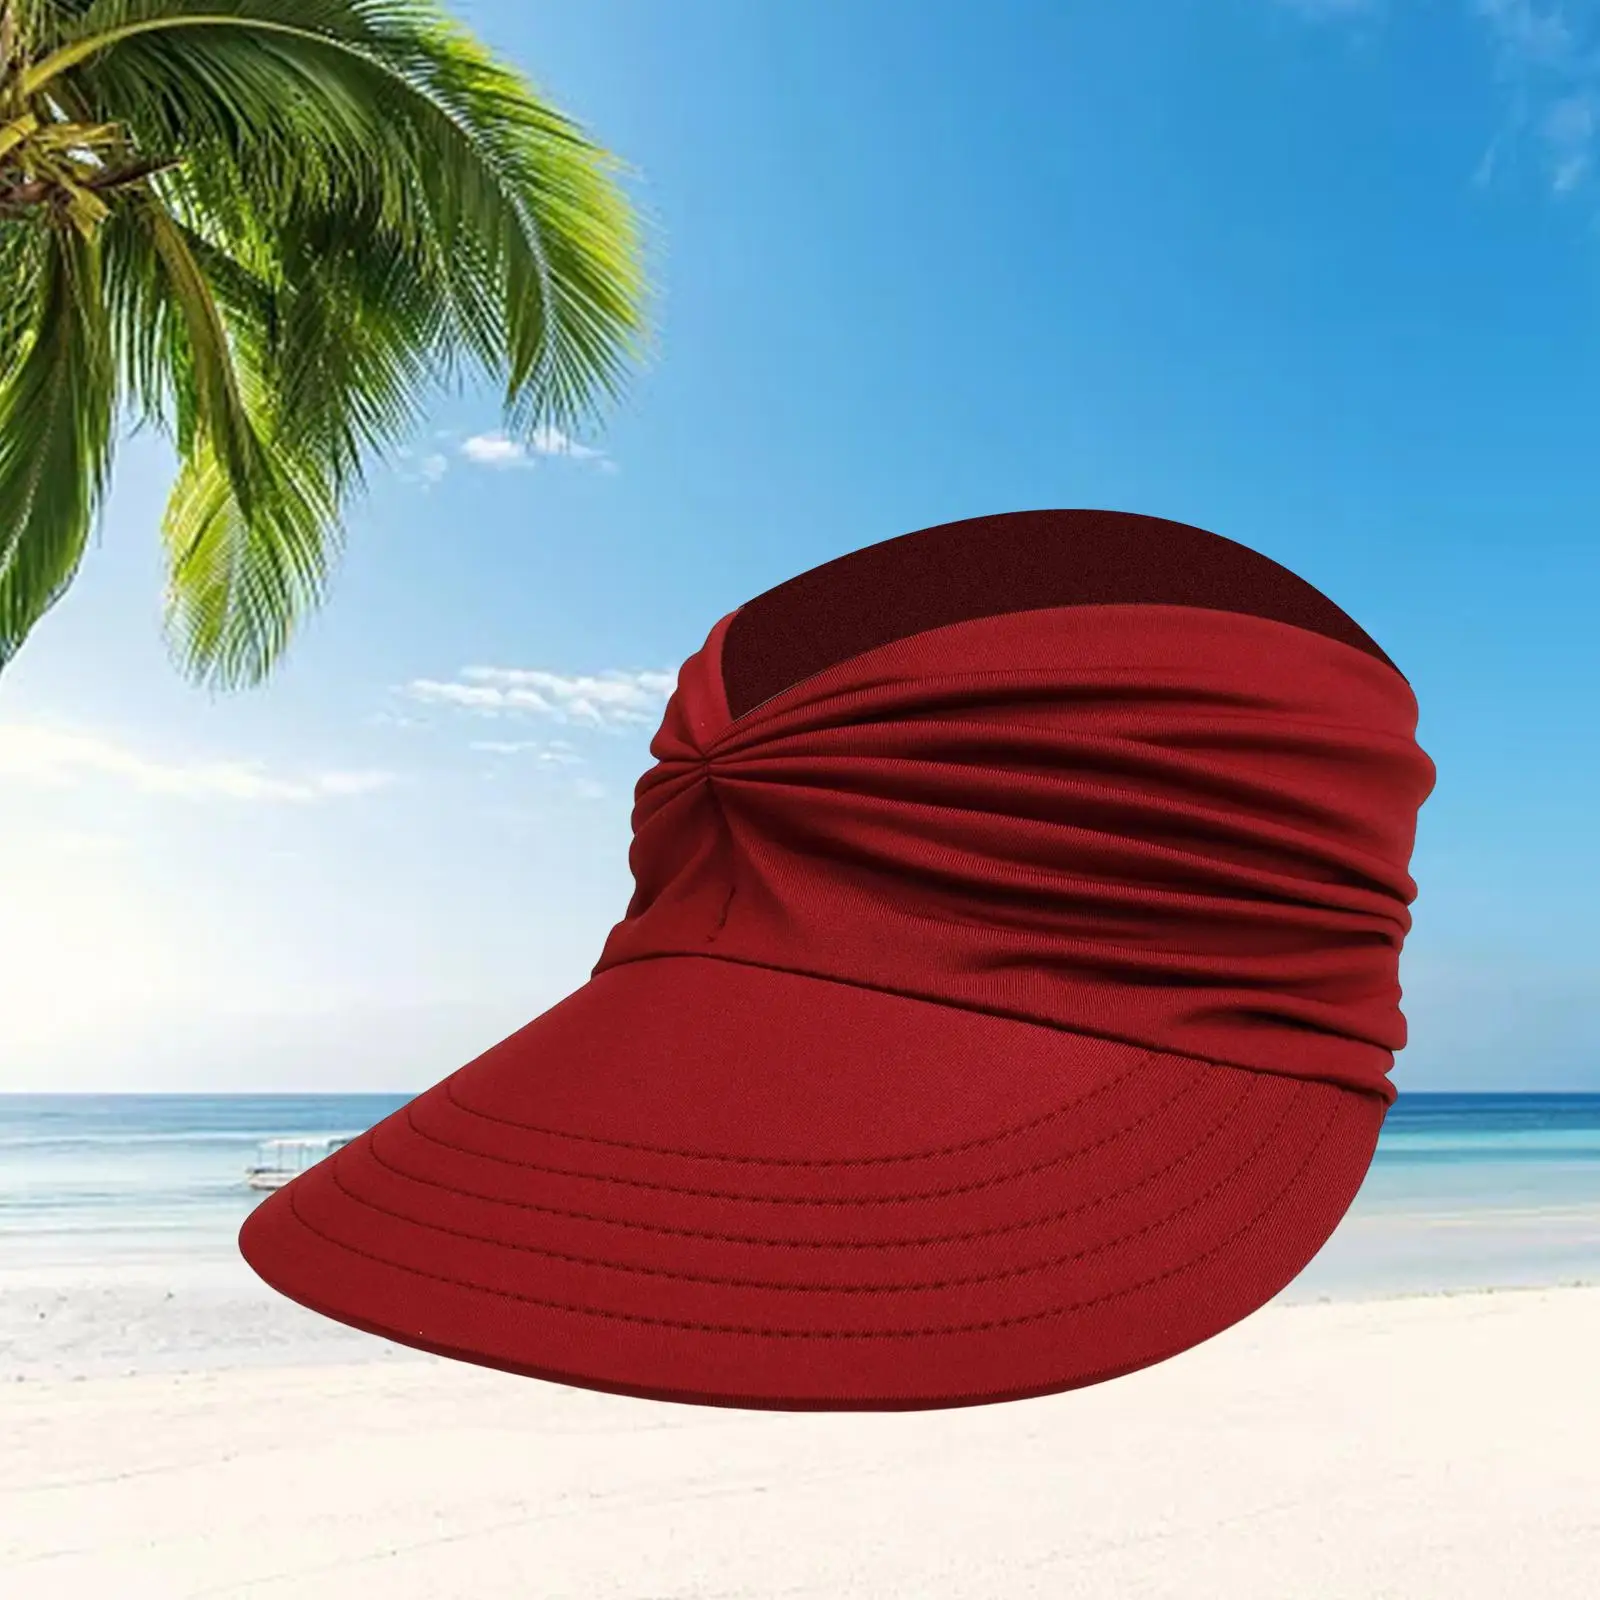 Hollow Top Hats Curly Hair Messy Bun Women Sun Visor Hat for Outdoor